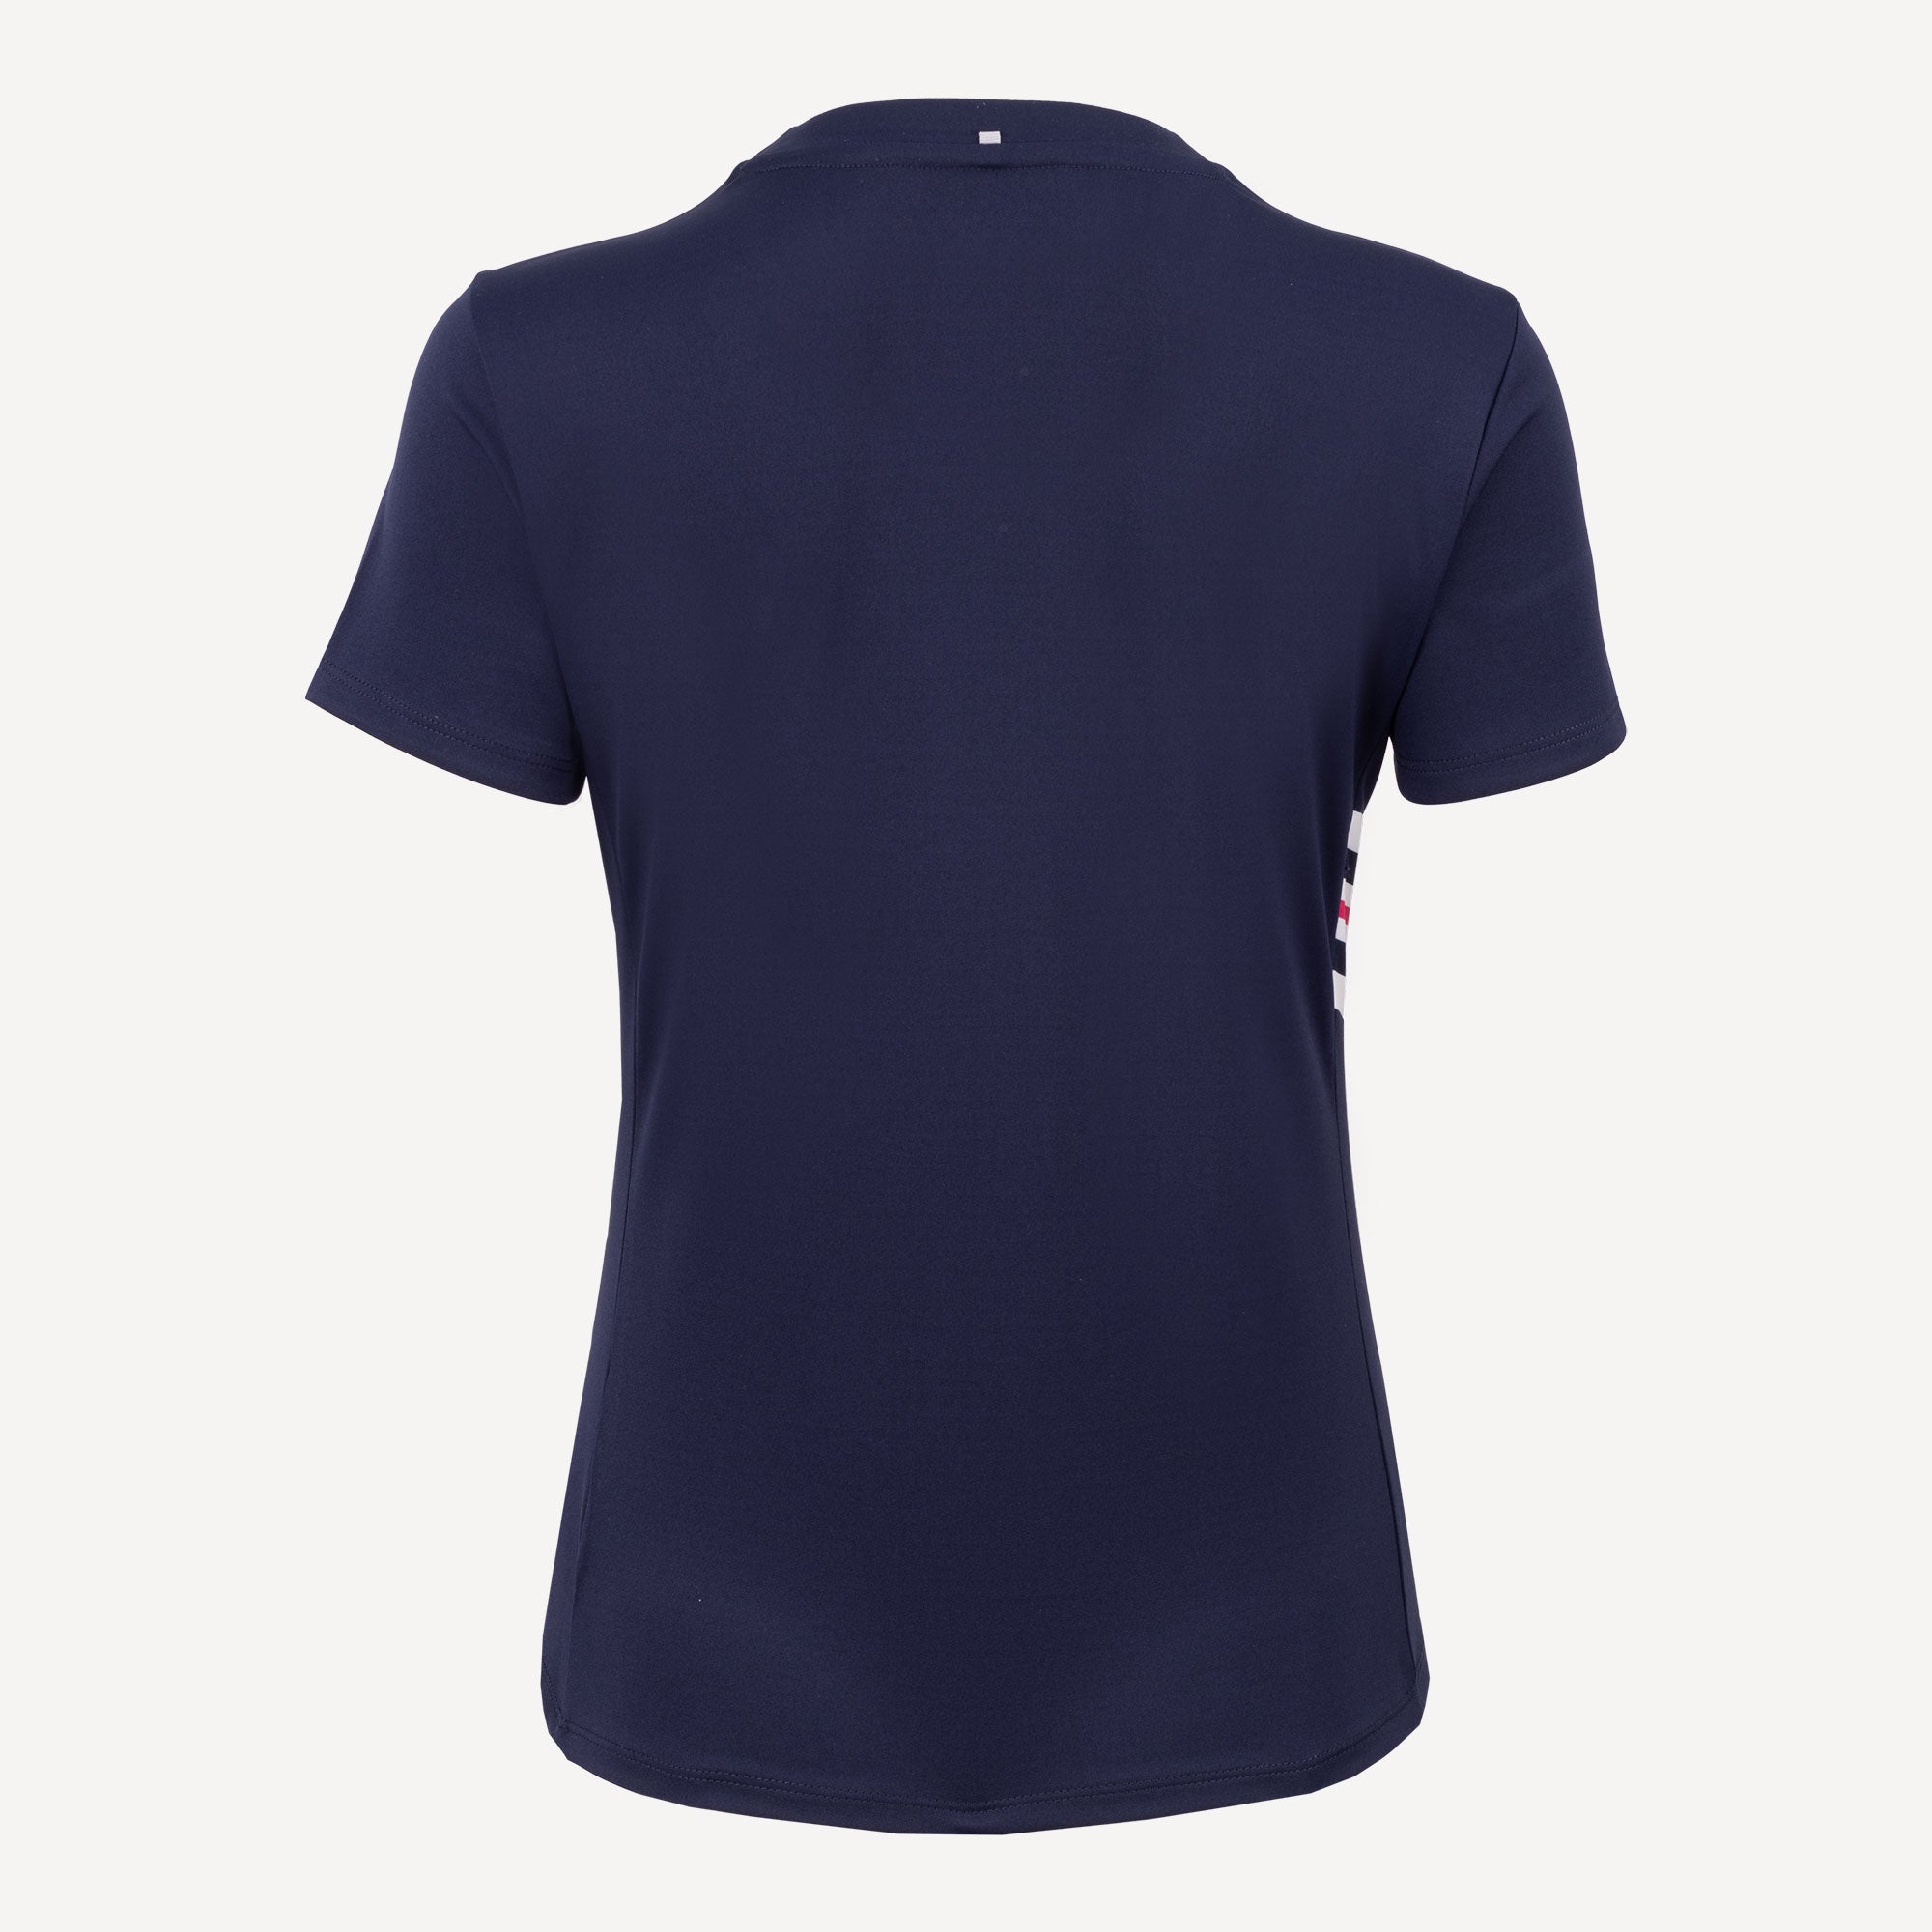 Fila Paula Women's Tennis Shirt Dark Blue (2)